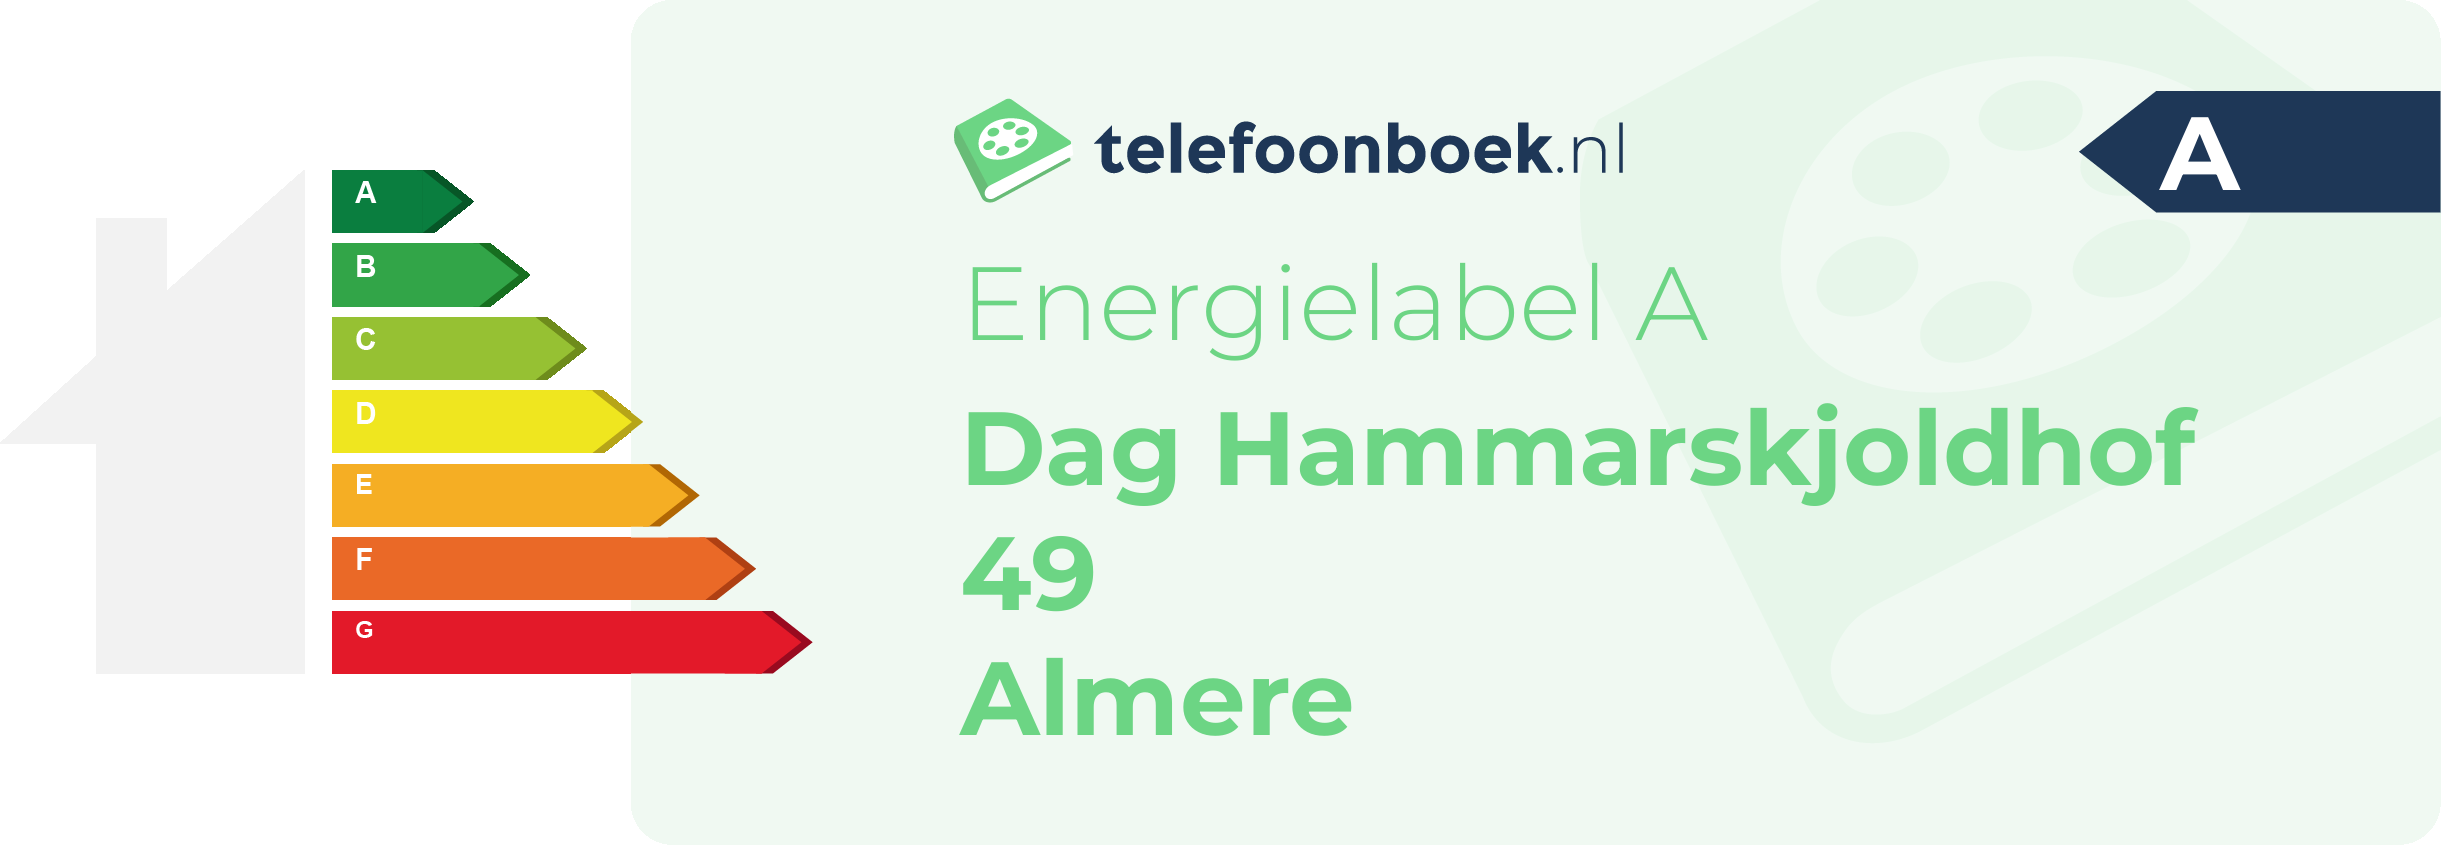 Energielabel Dag Hammarskjoldhof 49 Almere